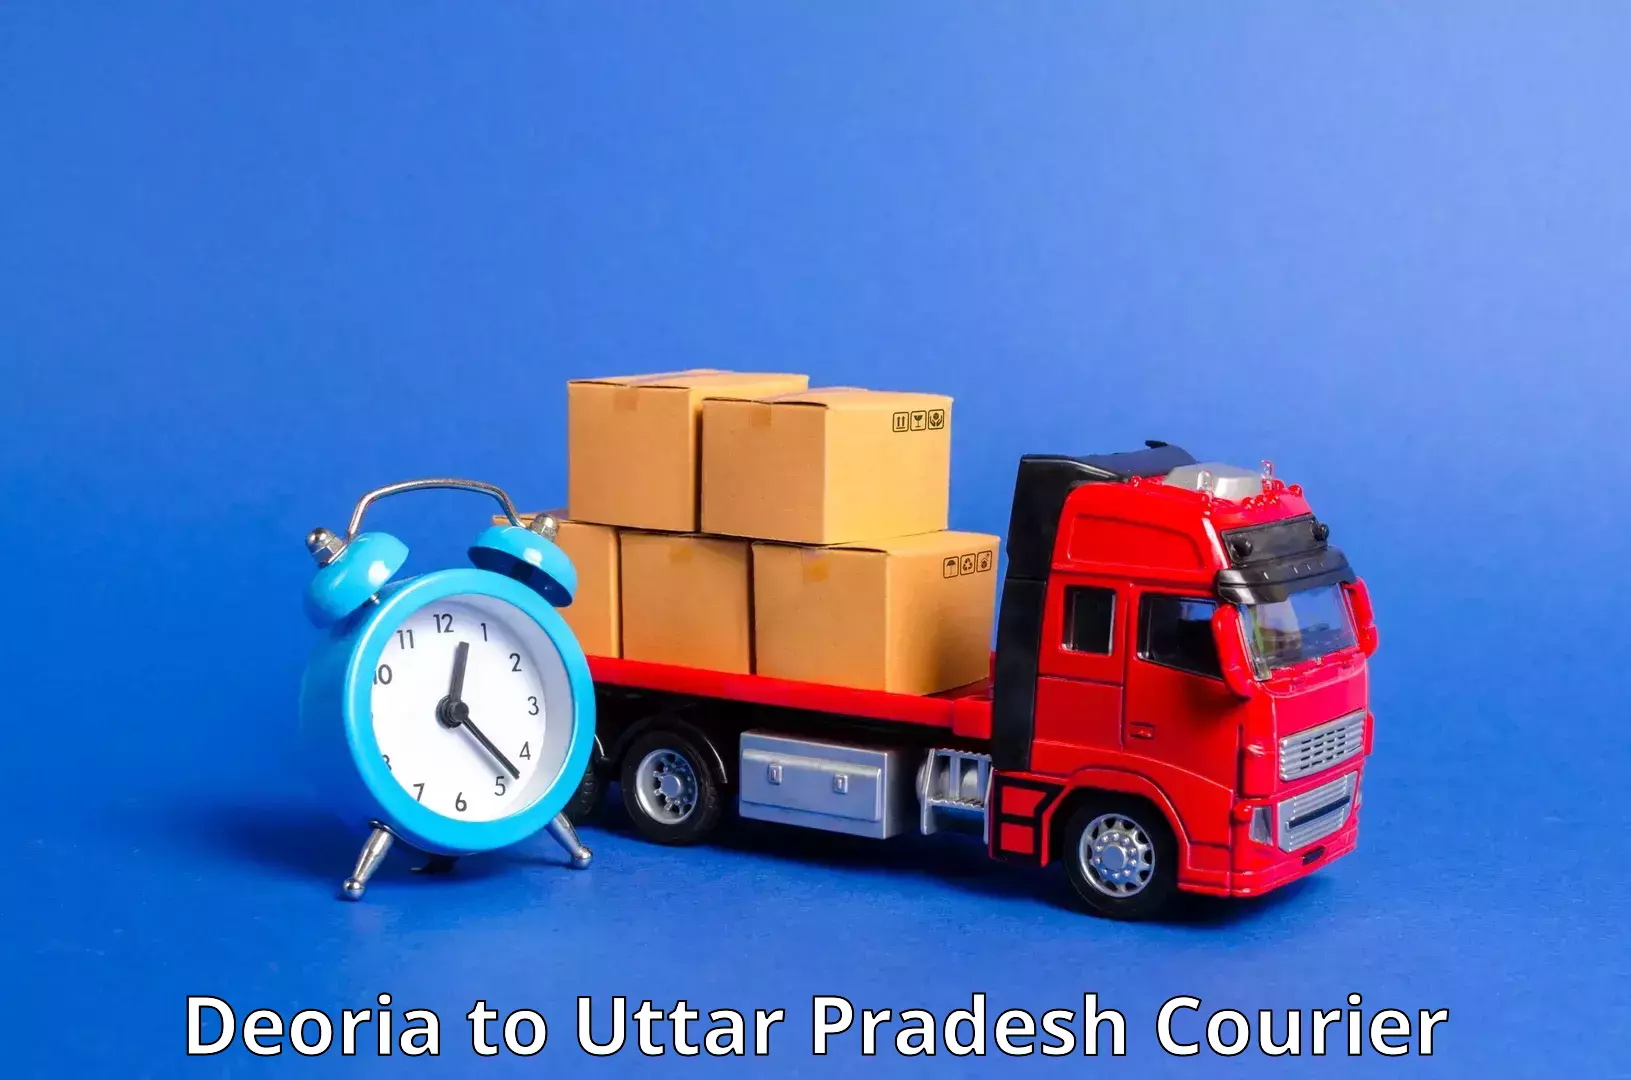 International courier networks Deoria to Kushinagar